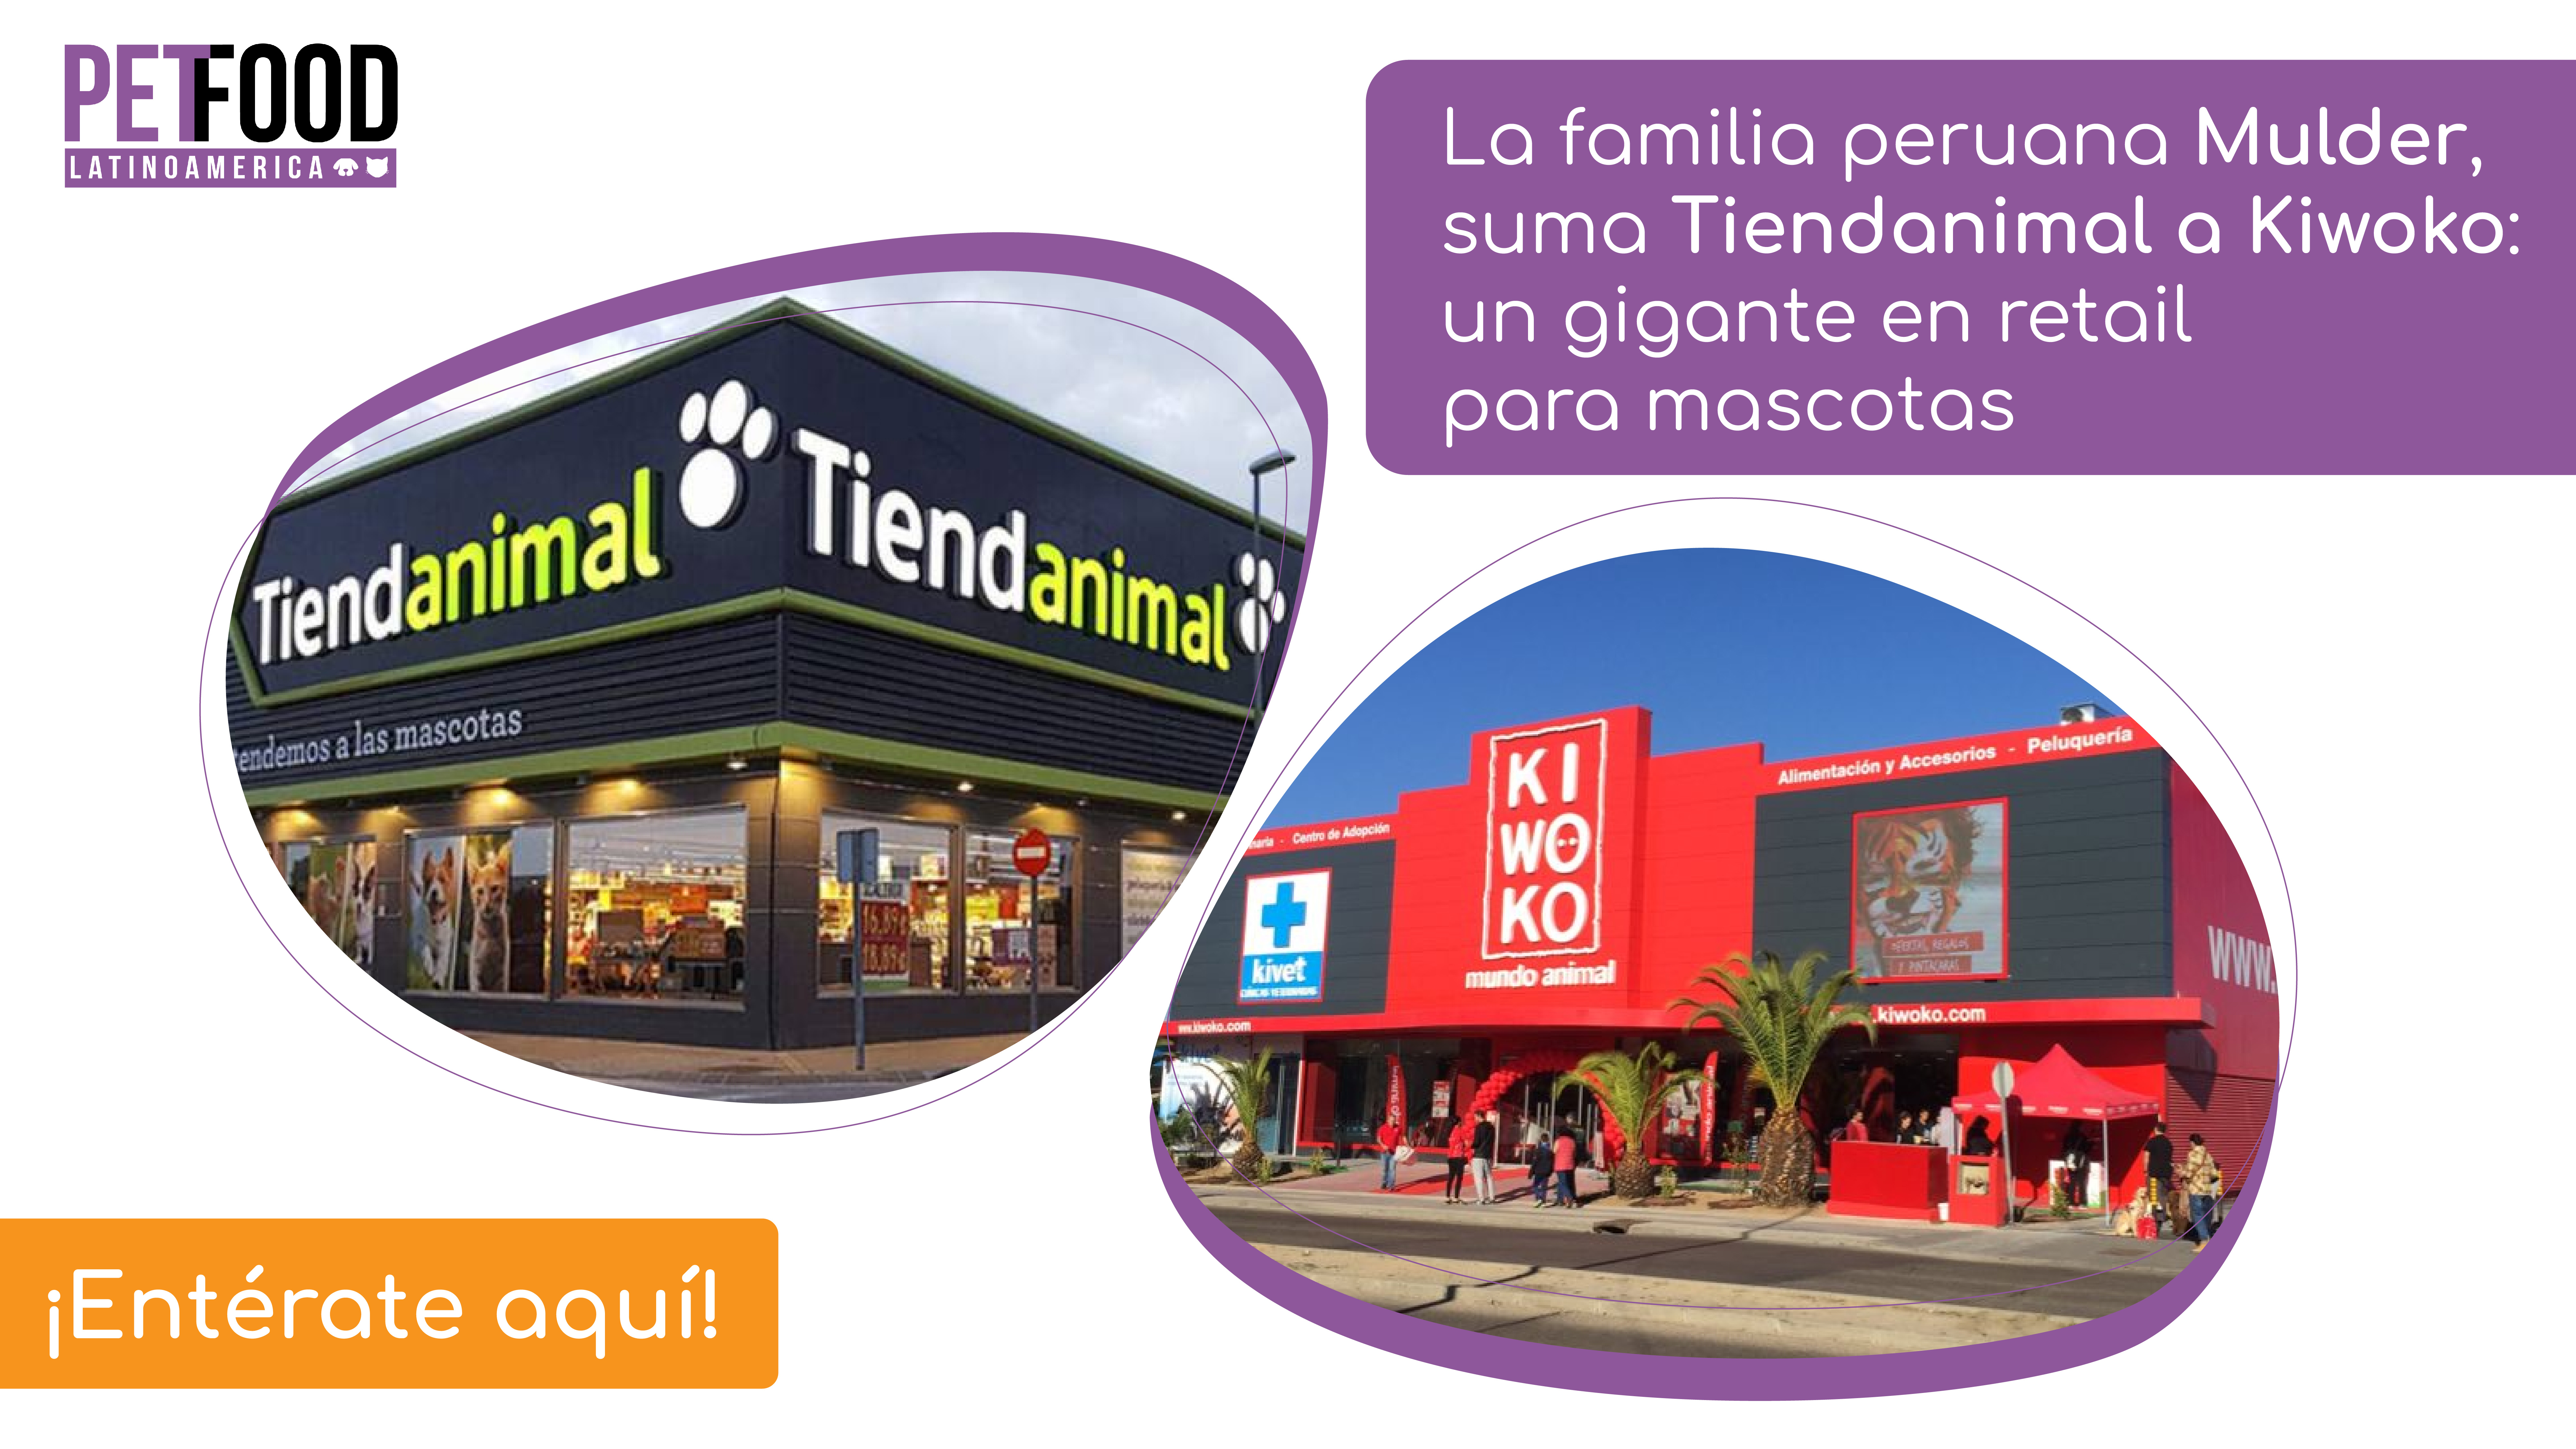 La familia peruana Mulder, suma Tiendanimal a Kiwoko: un gigante en retail para mascotas